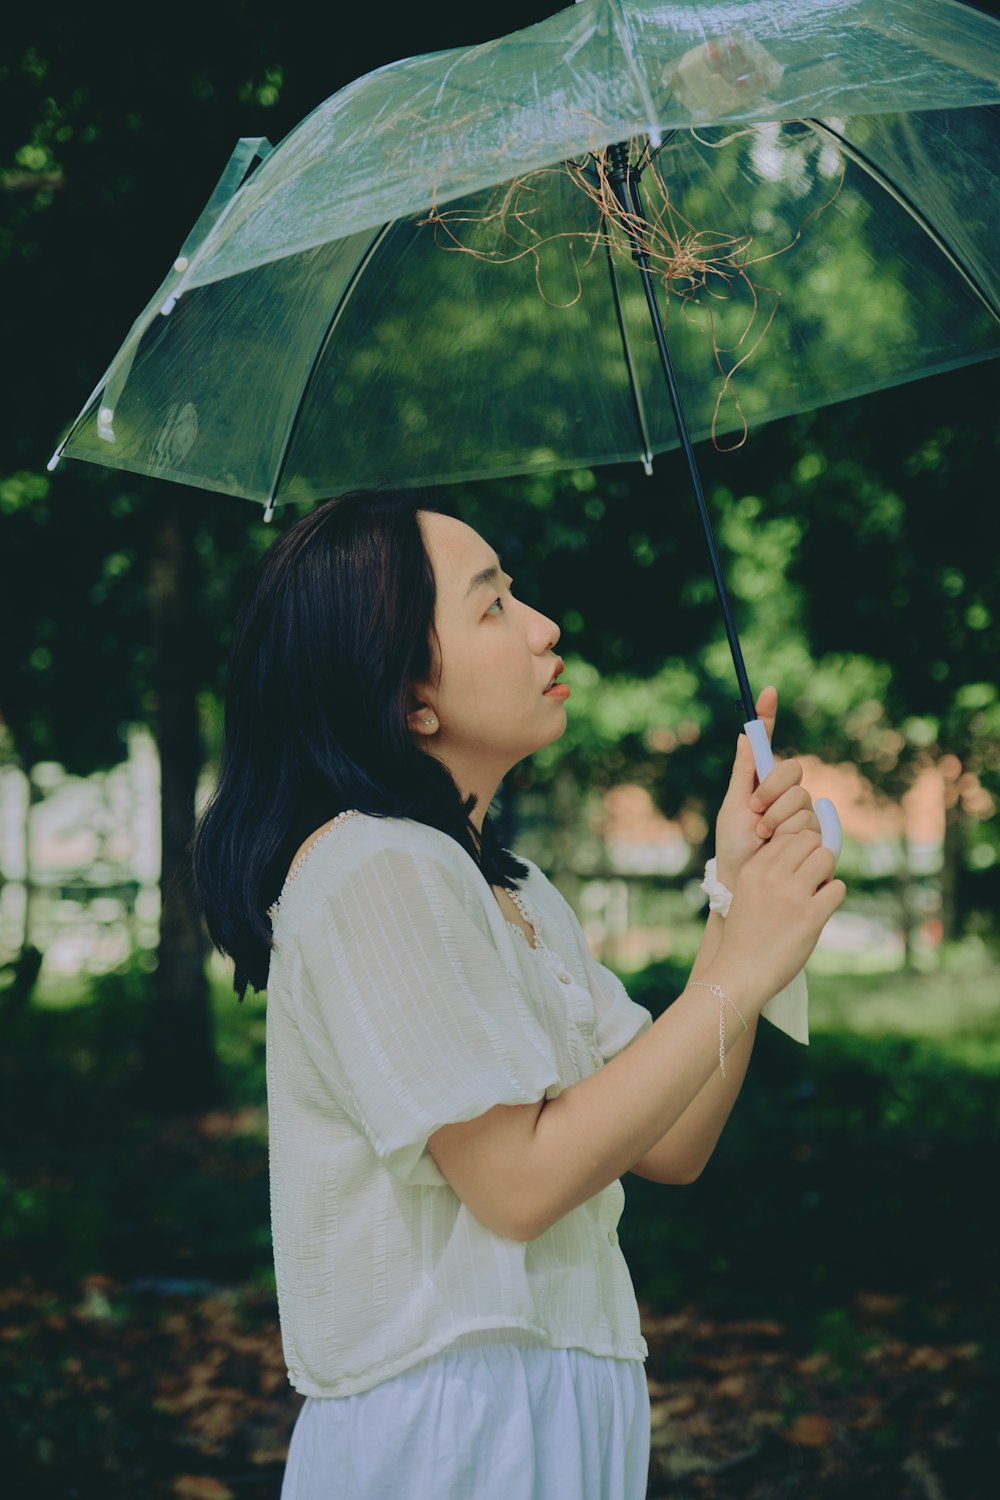 woman in white shirt holding umbrella